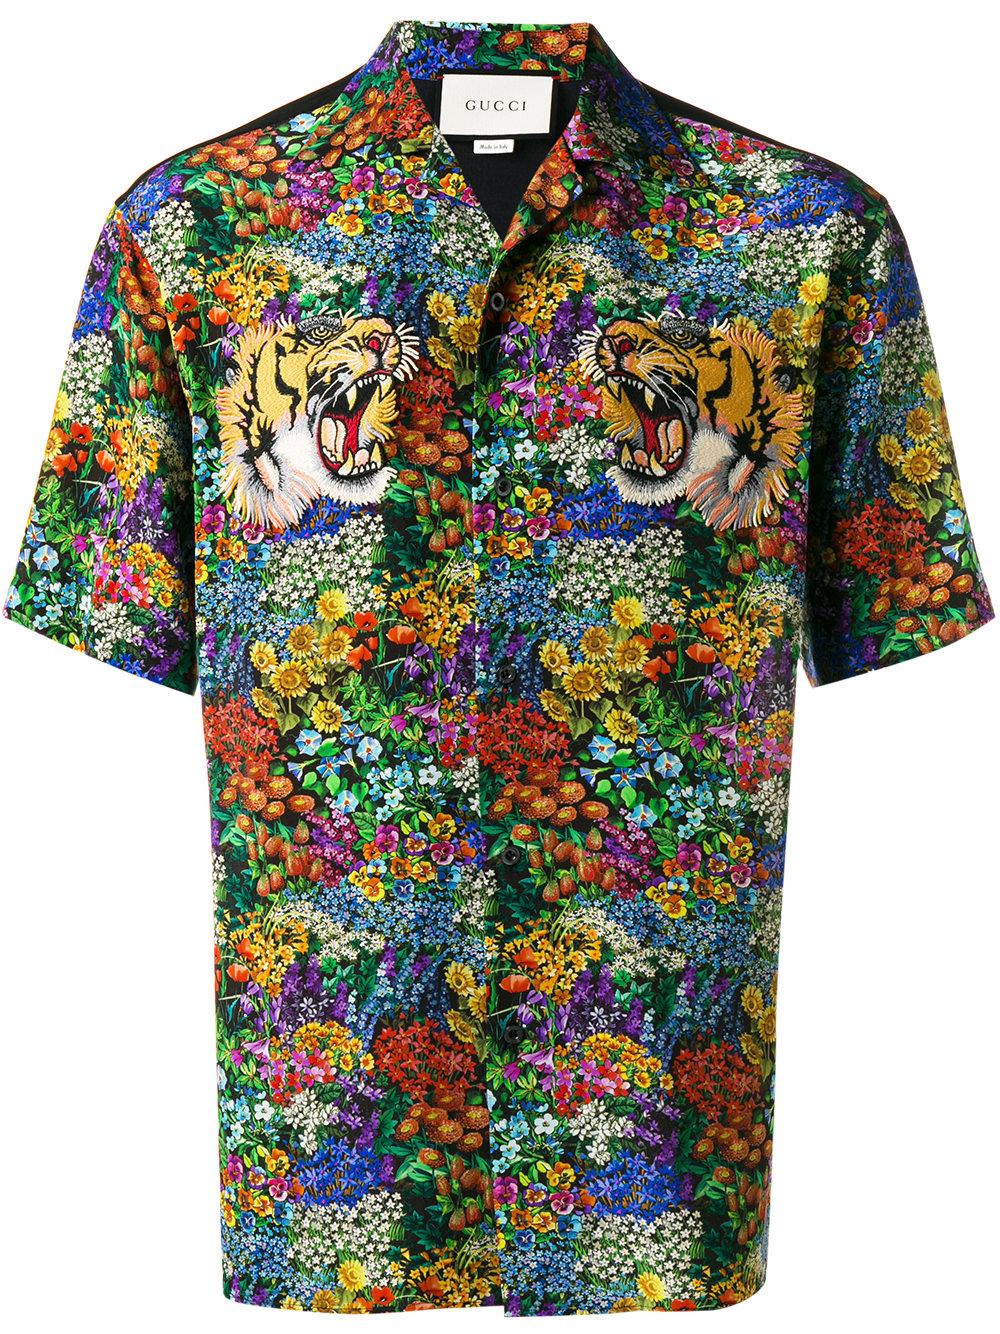 Lyst - Gucci Floral Print Bowling Shirt for Men